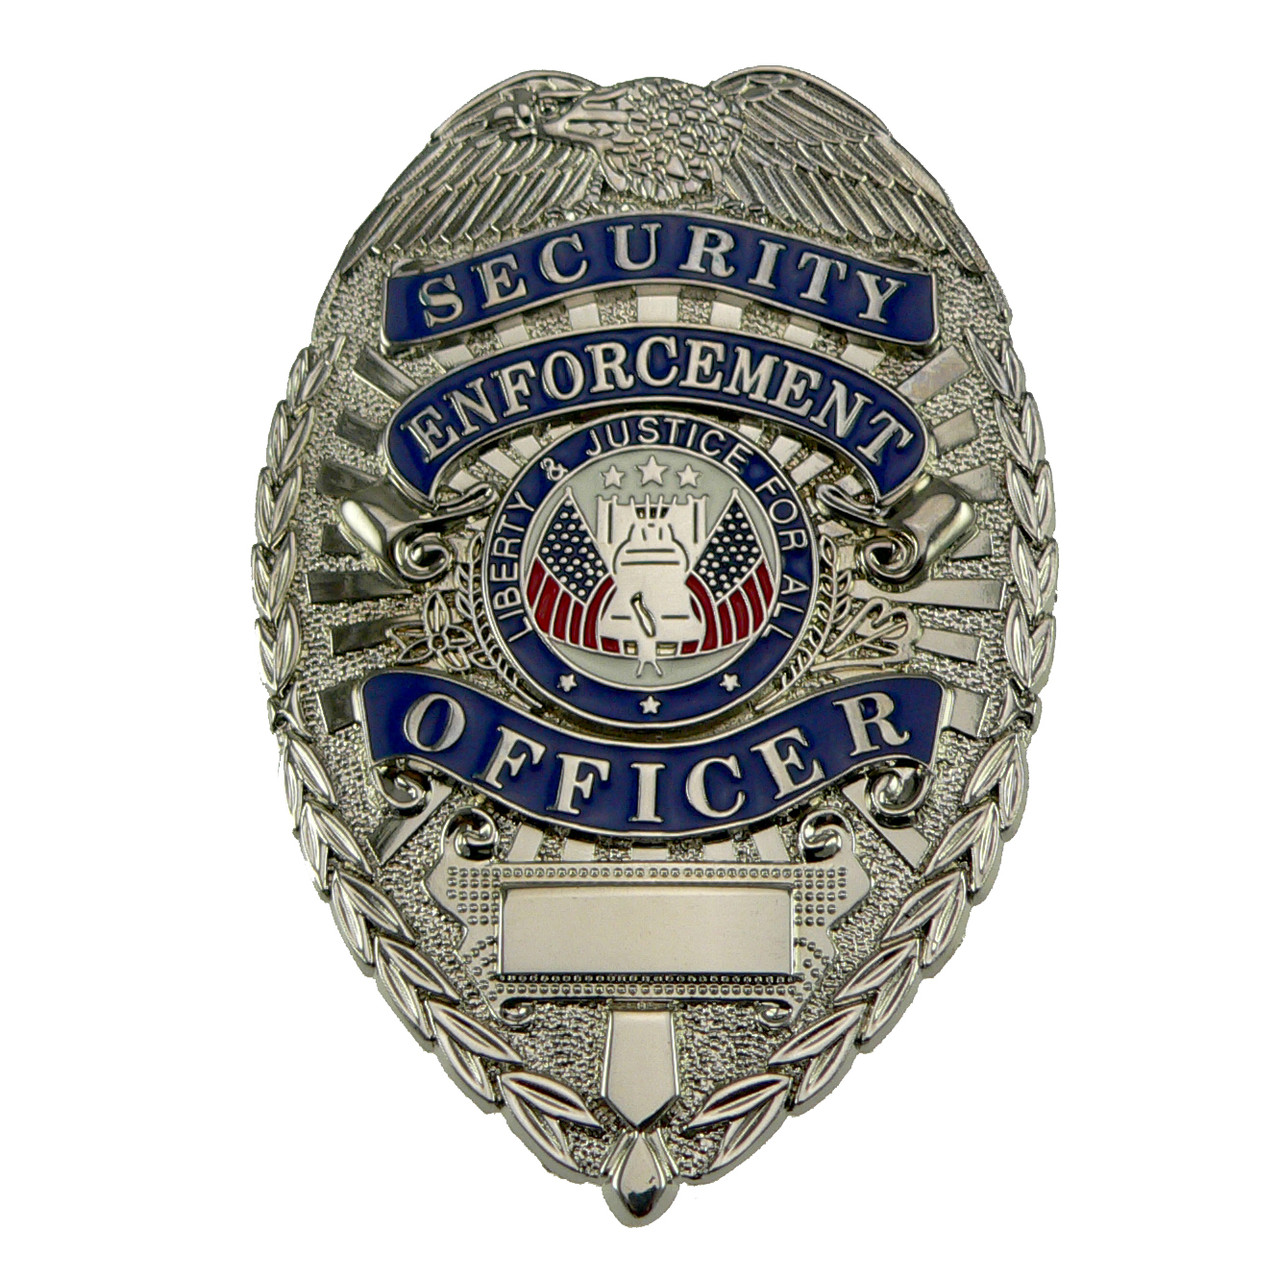 Large Executive Protection Agent Security Officer Enforcement Uniform Wallet